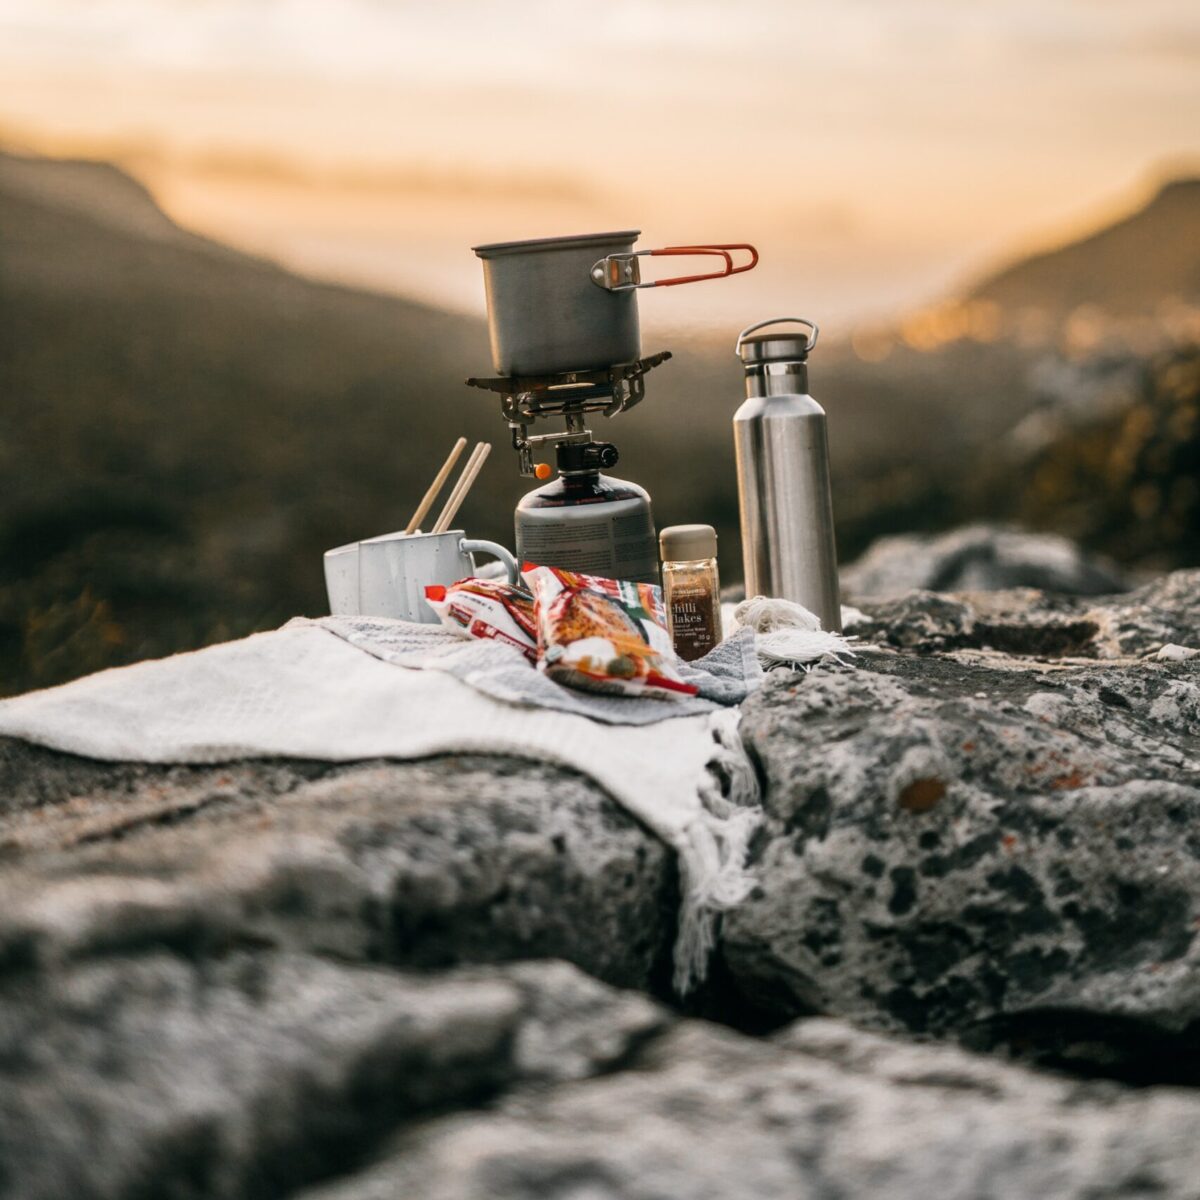 A tumbler next to a cooking pot on a portable stove Photo credit: Taryn Elliott via Pexels